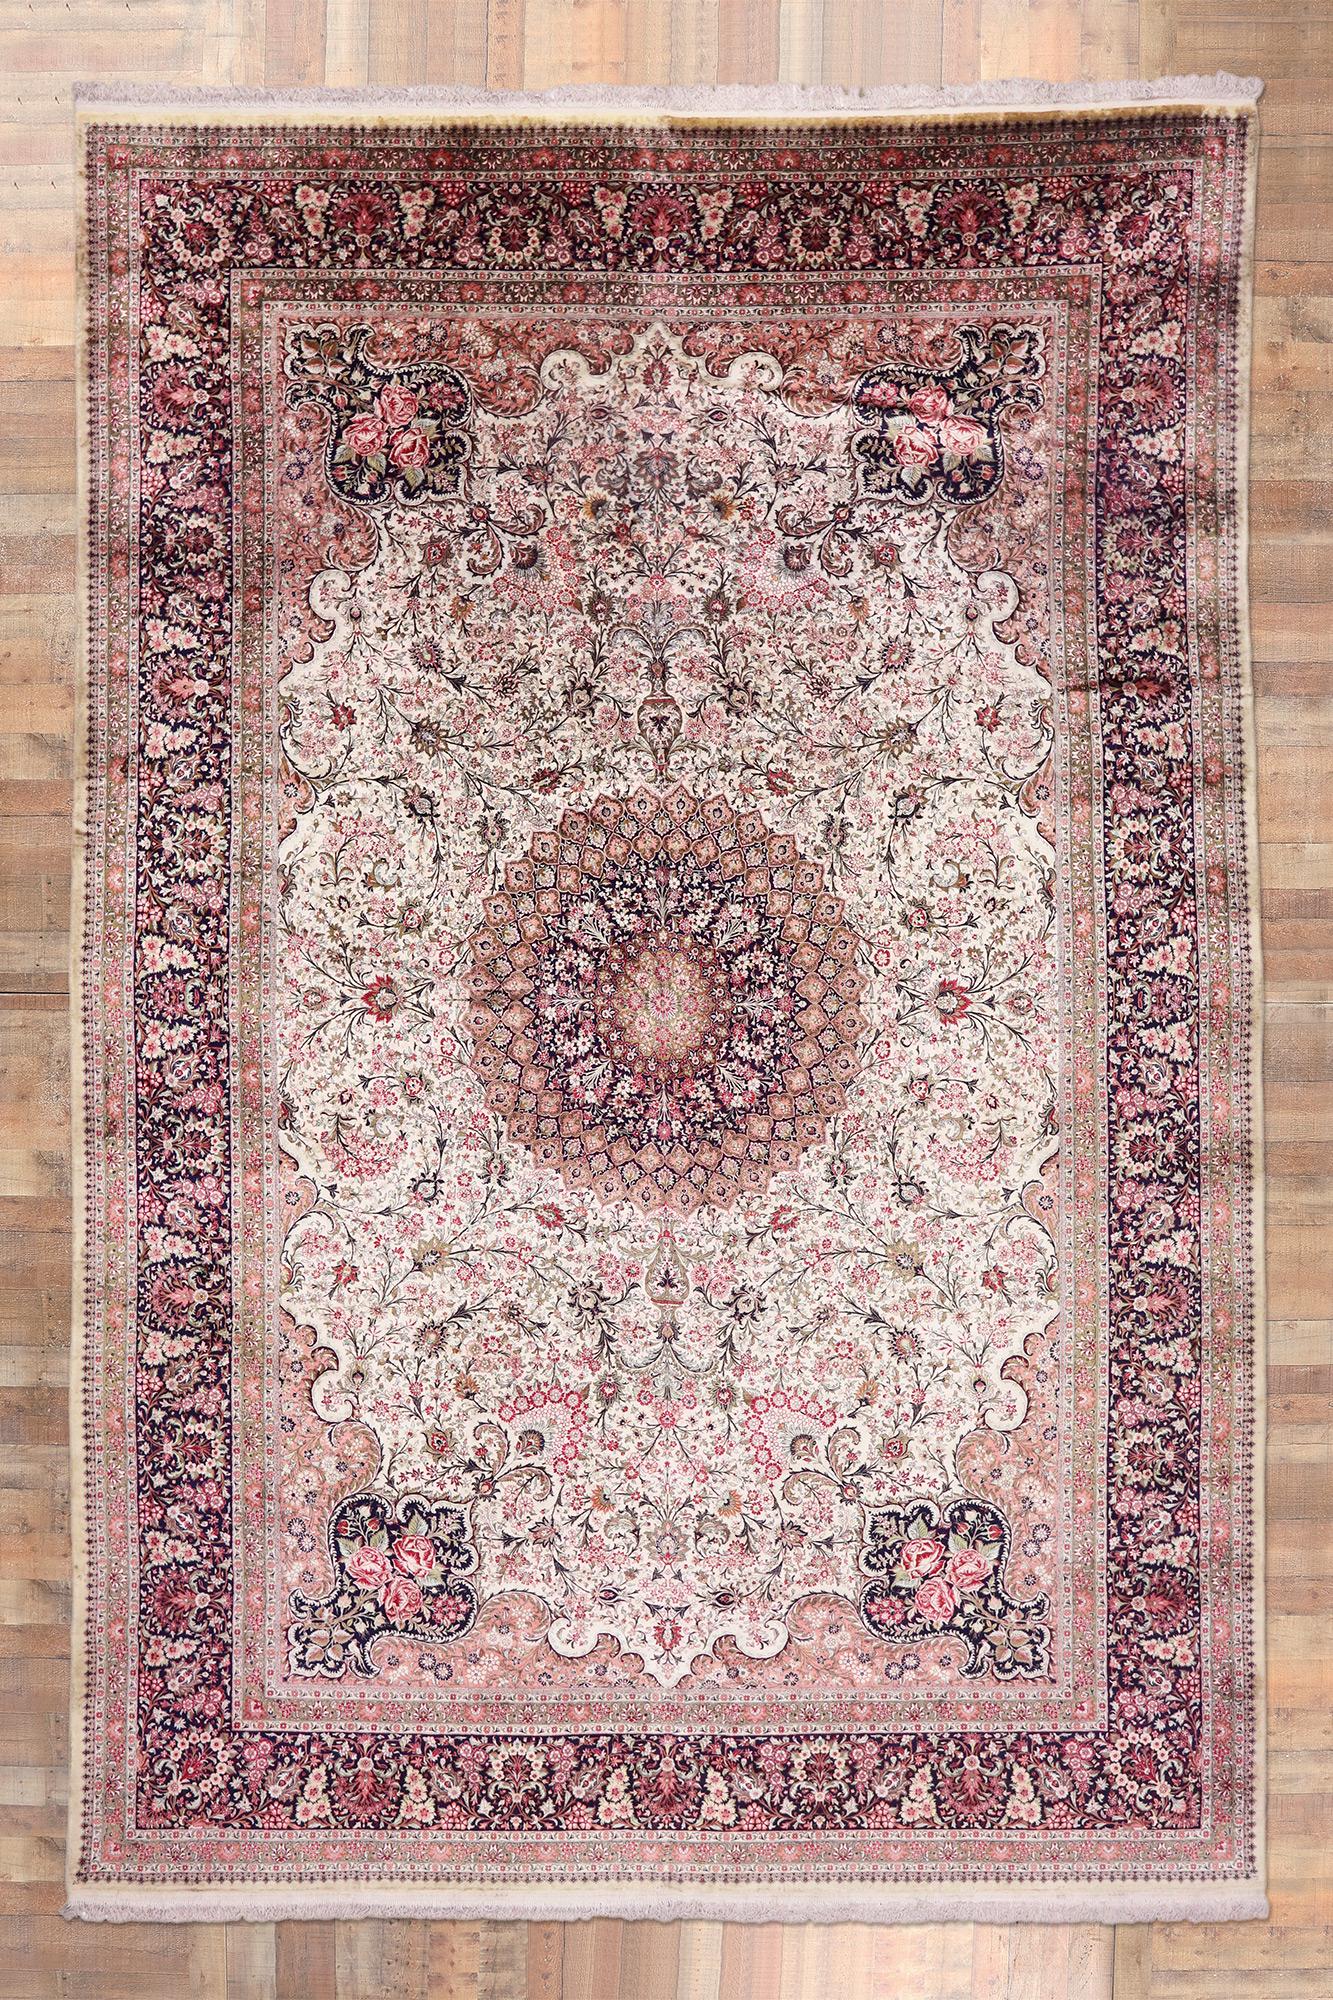 Vintage Pink Persian Silk Qum Rug, 13'07 x 20'01 For Sale 5